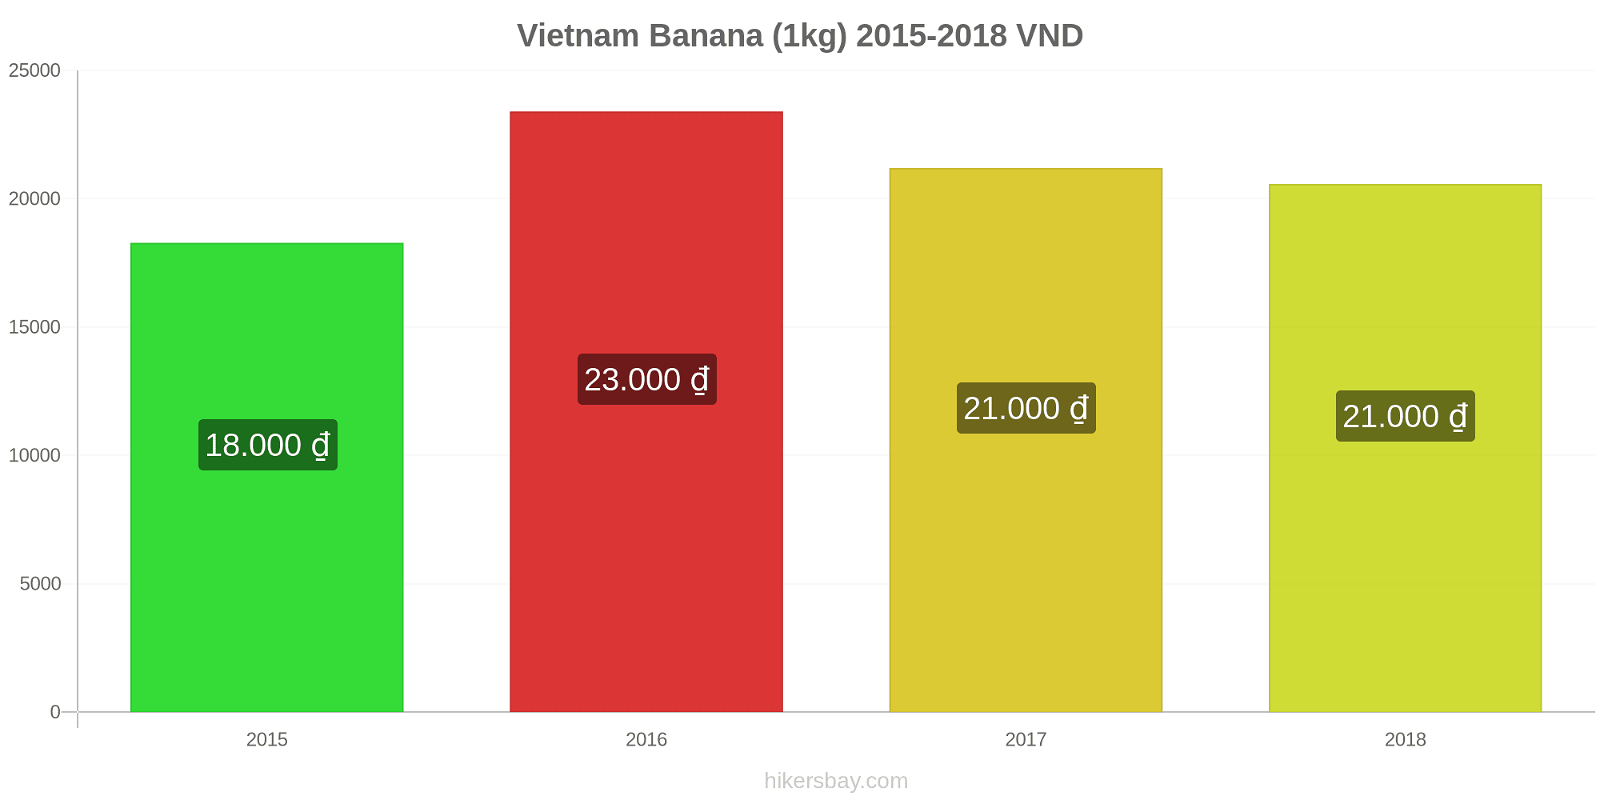 Vietnam cambi di prezzo Banane (1kg) hikersbay.com